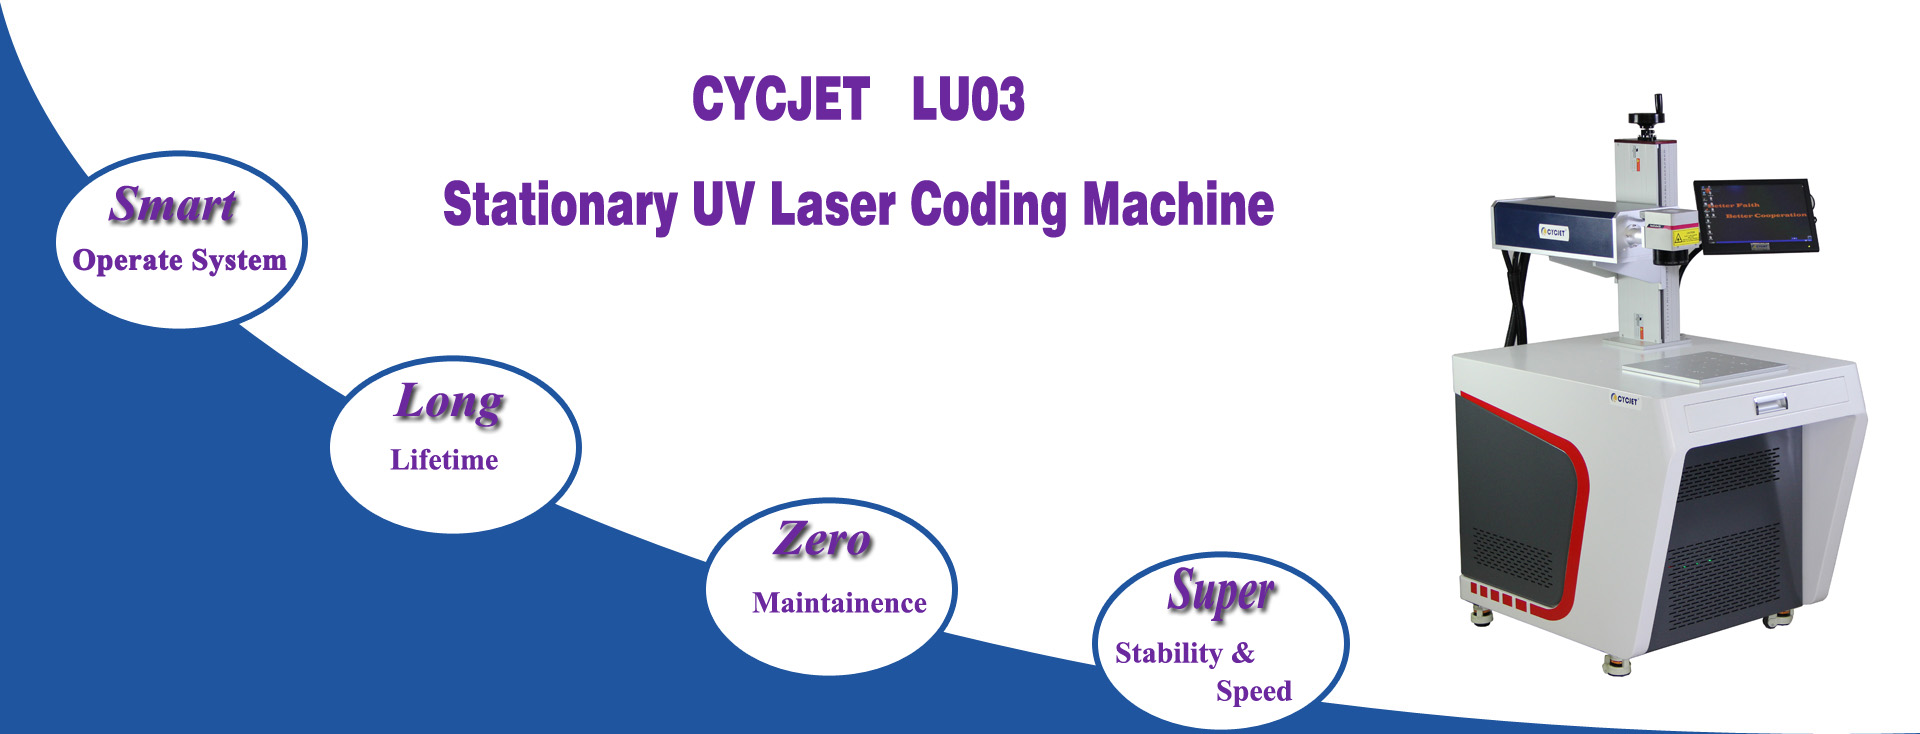 DETAILS OF CYCJET UV LASER PRINTER-LU03.jpg